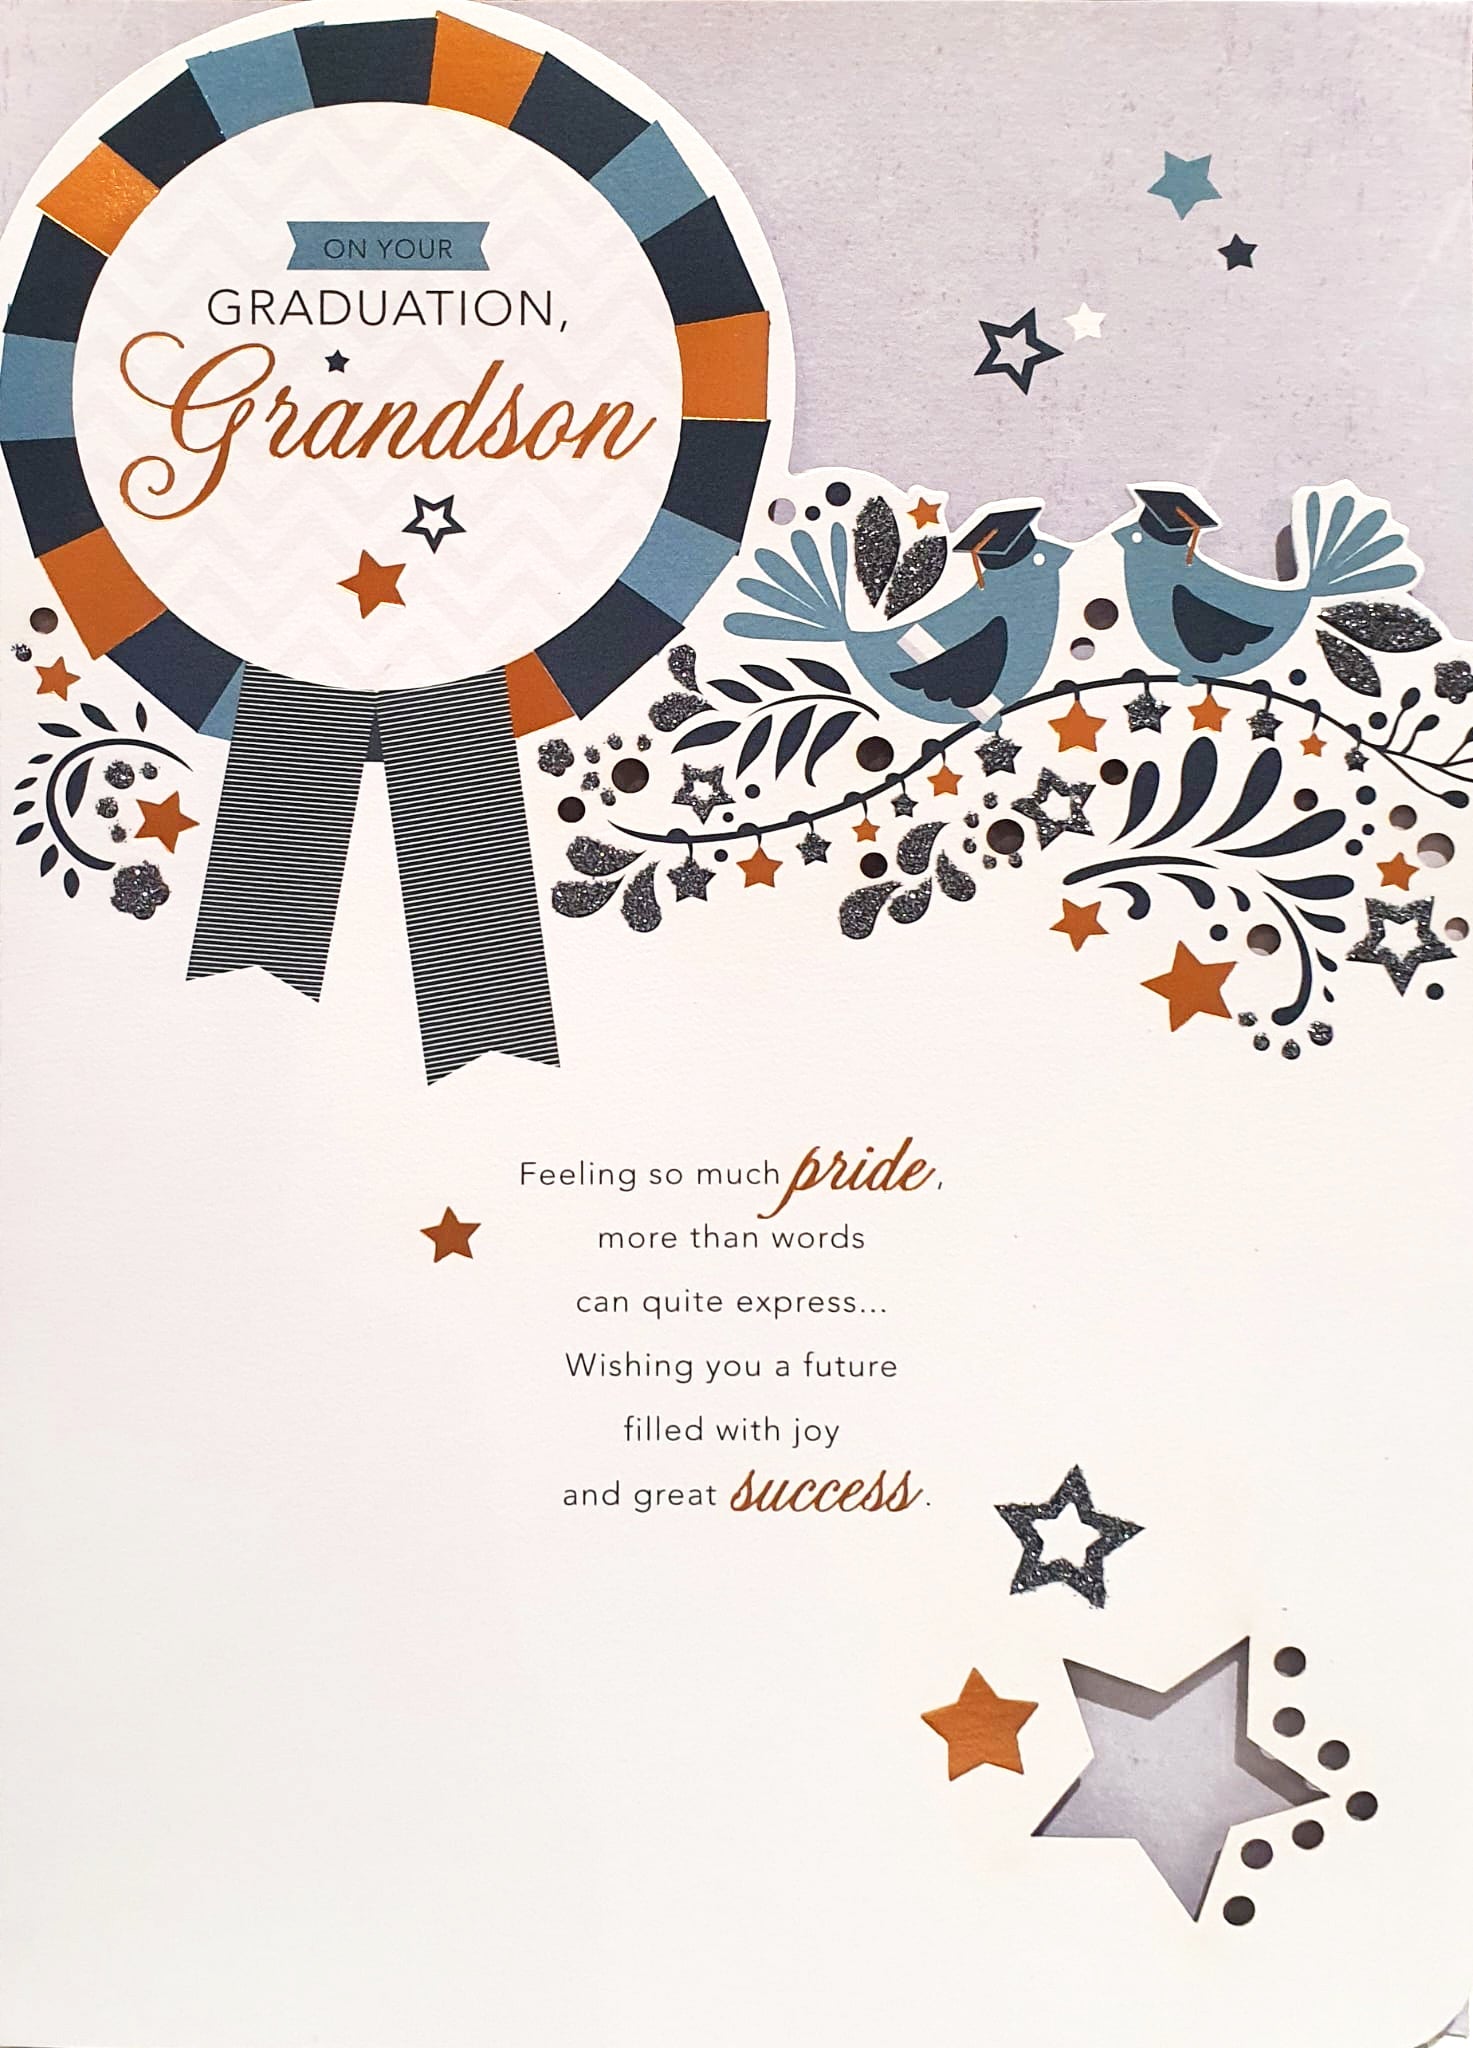 Grandson Graduation Card - A Proud Rosette Of Success